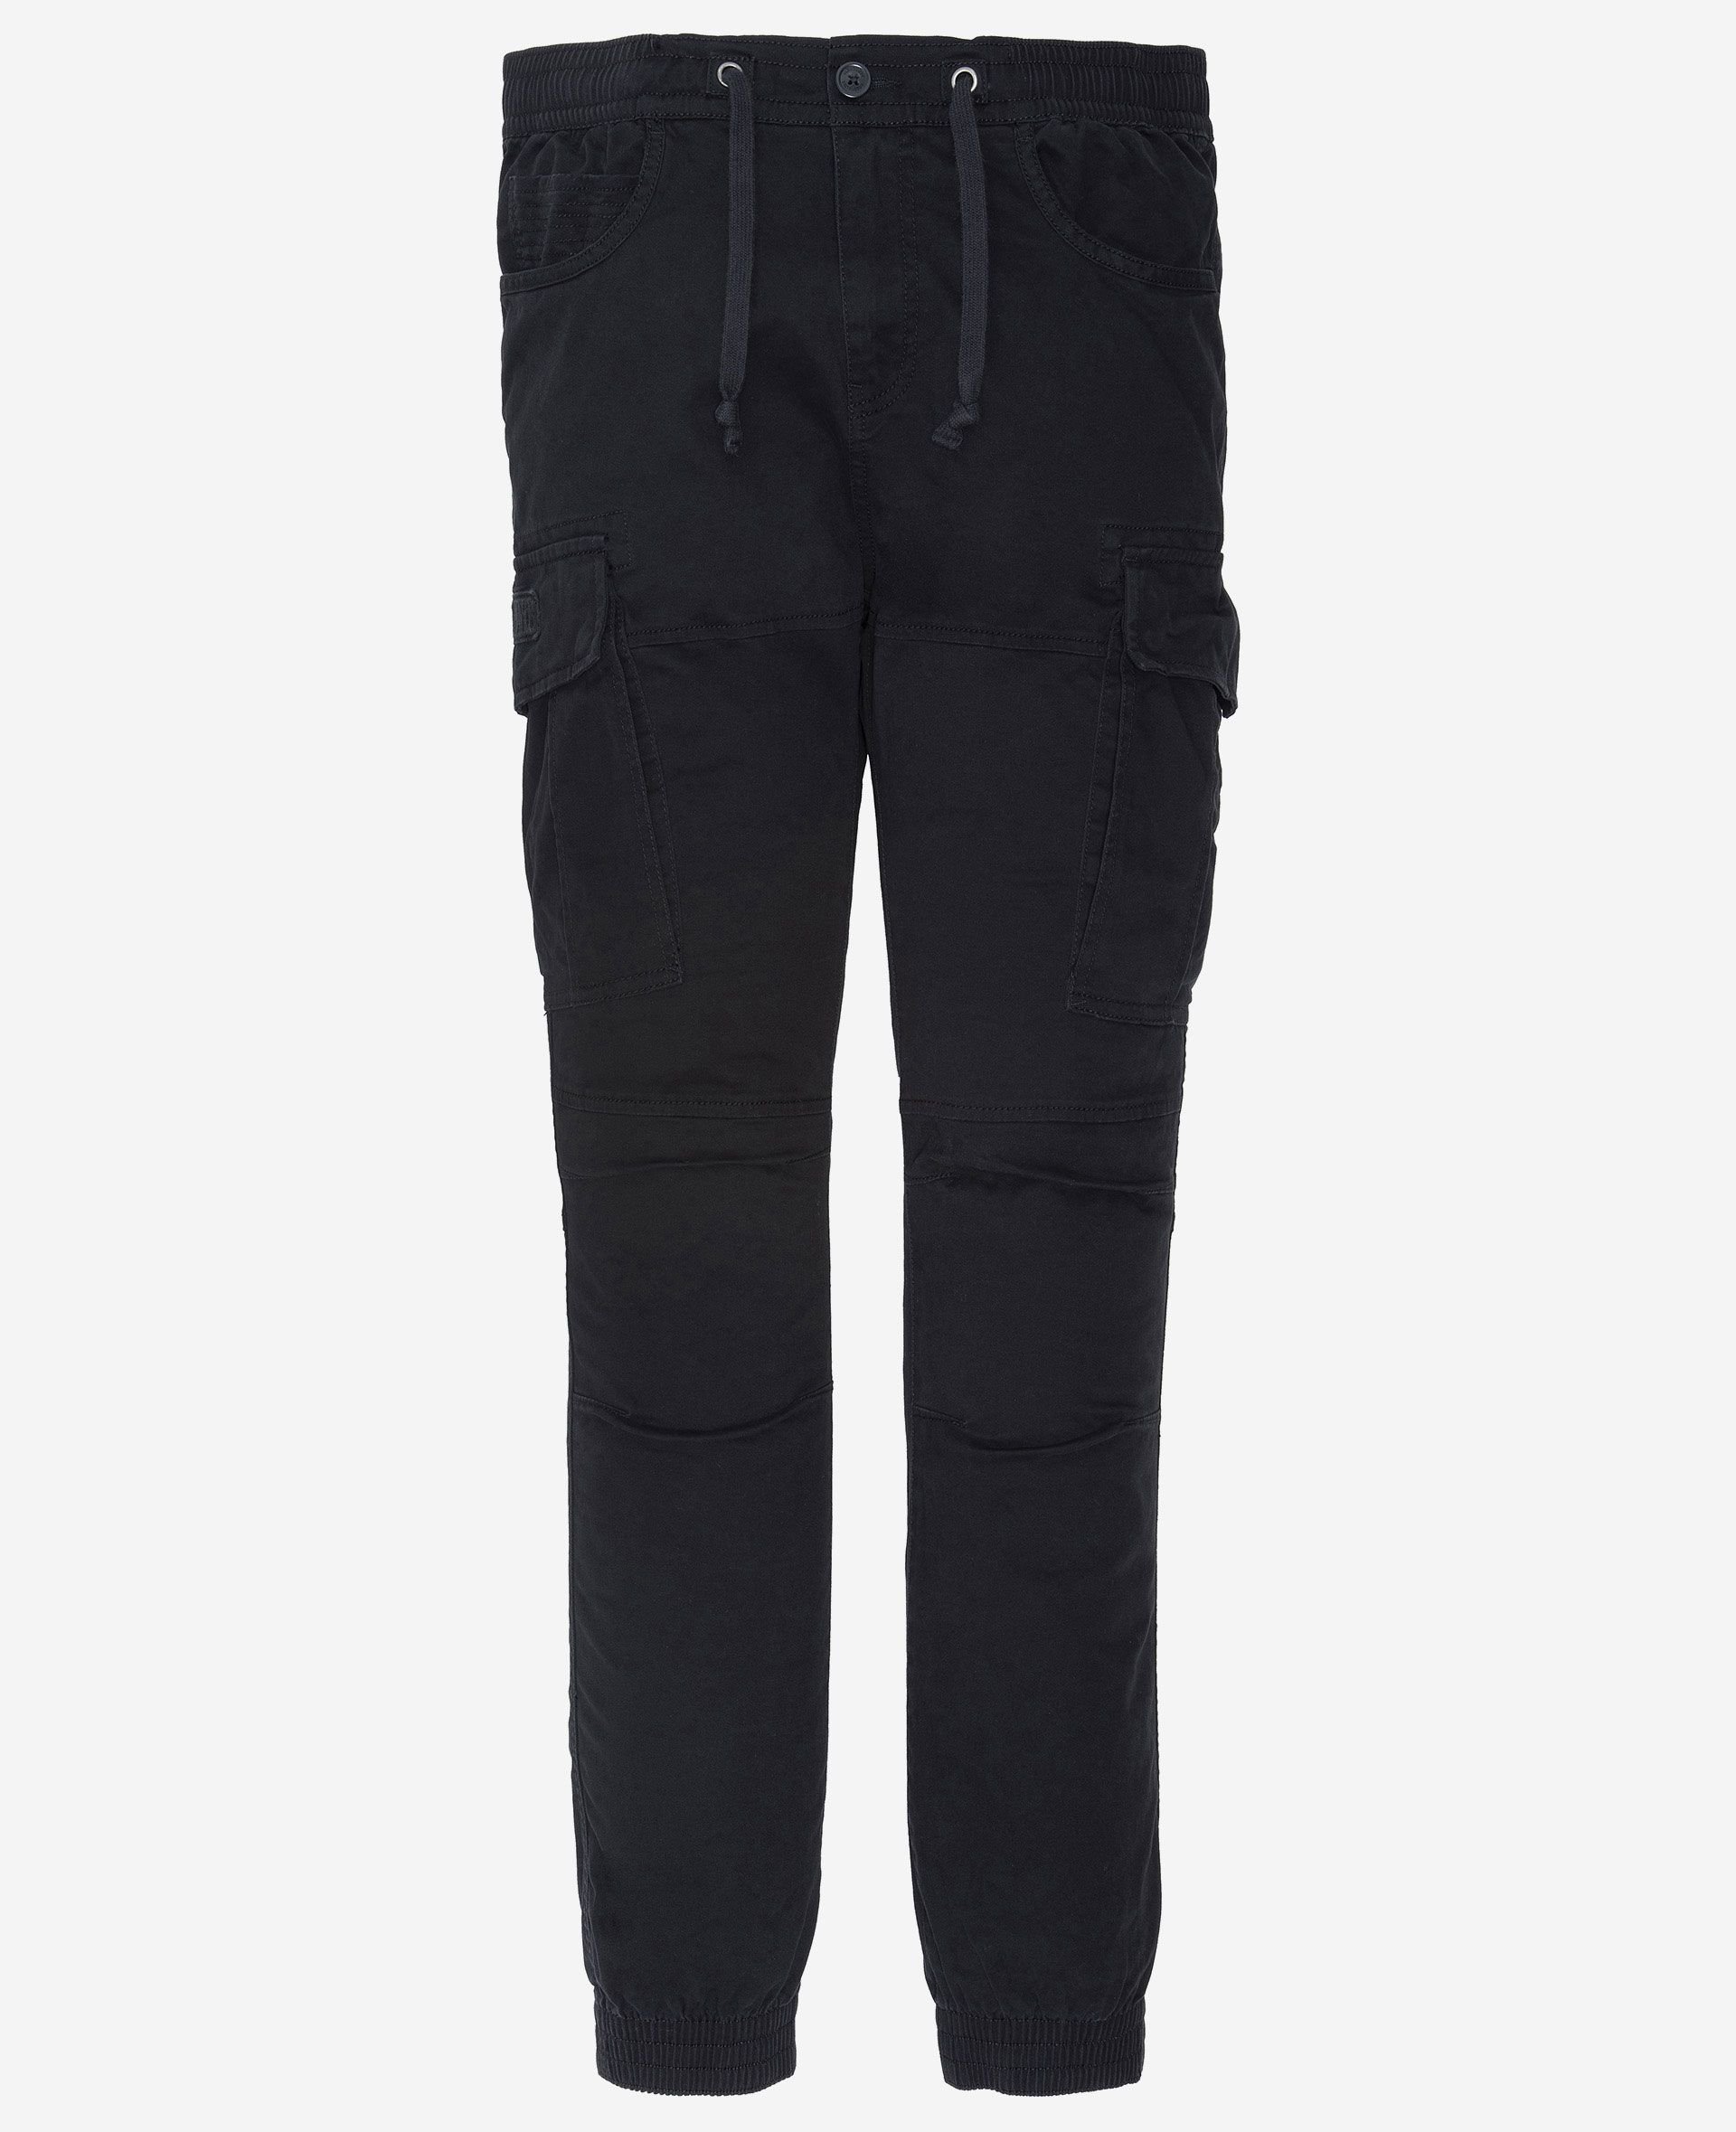 Pantalons sport/streetwear  Schott TRRELAX70 BLACK